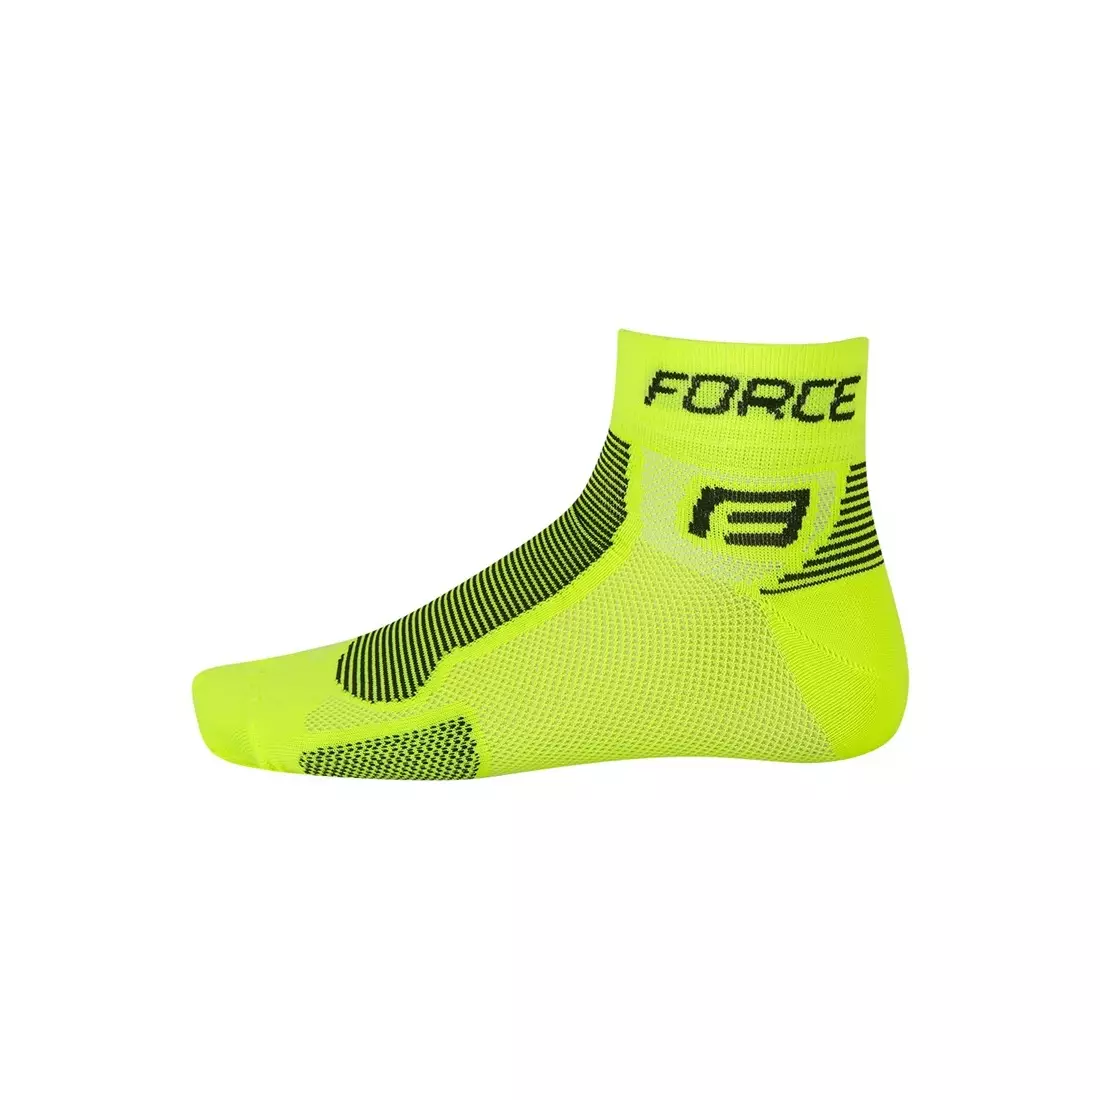 FORCE socks 9010, color: fluorine